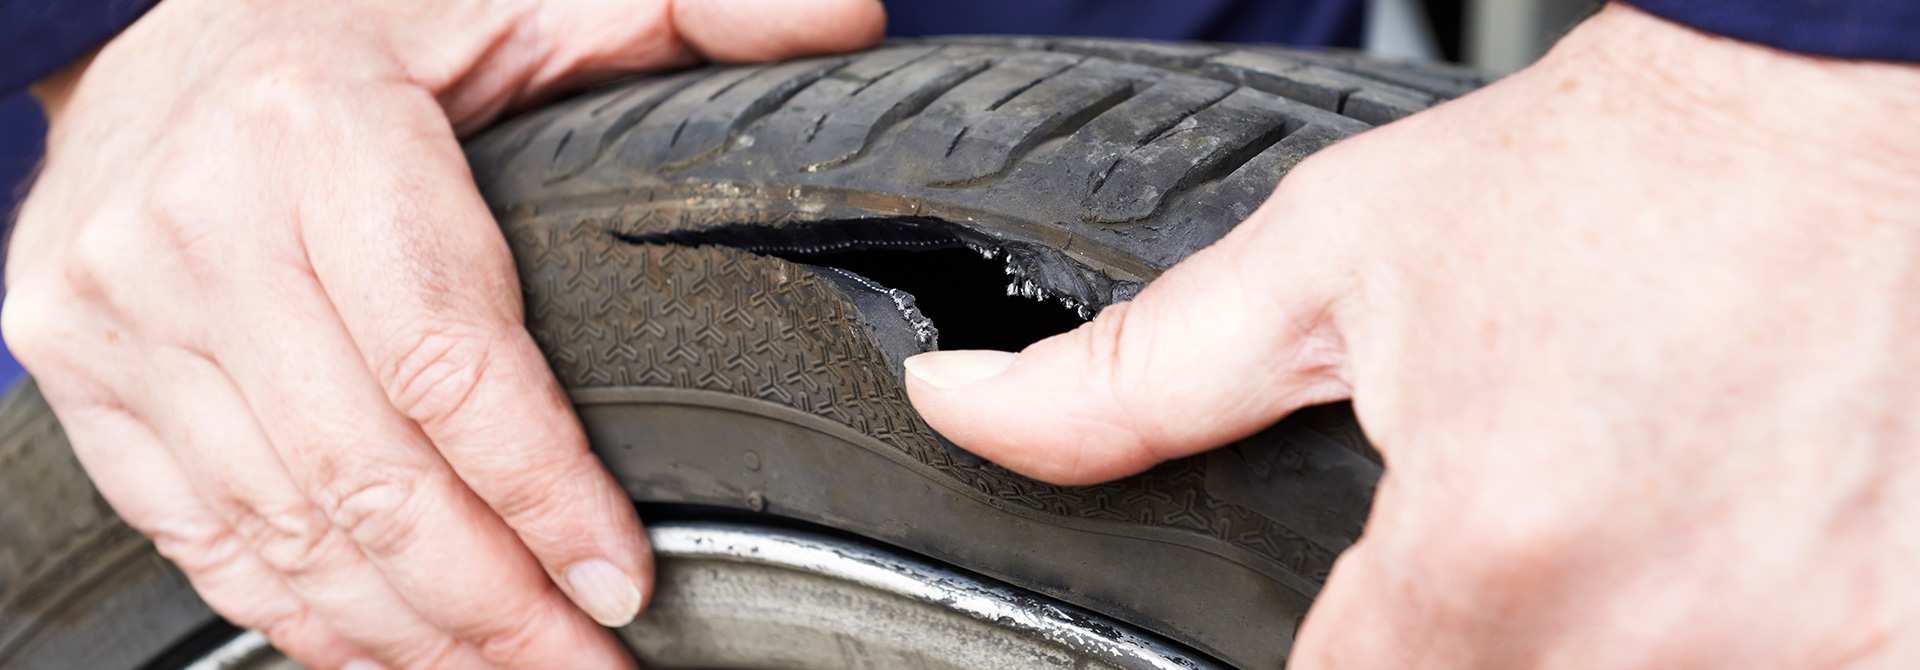 bg tire defects